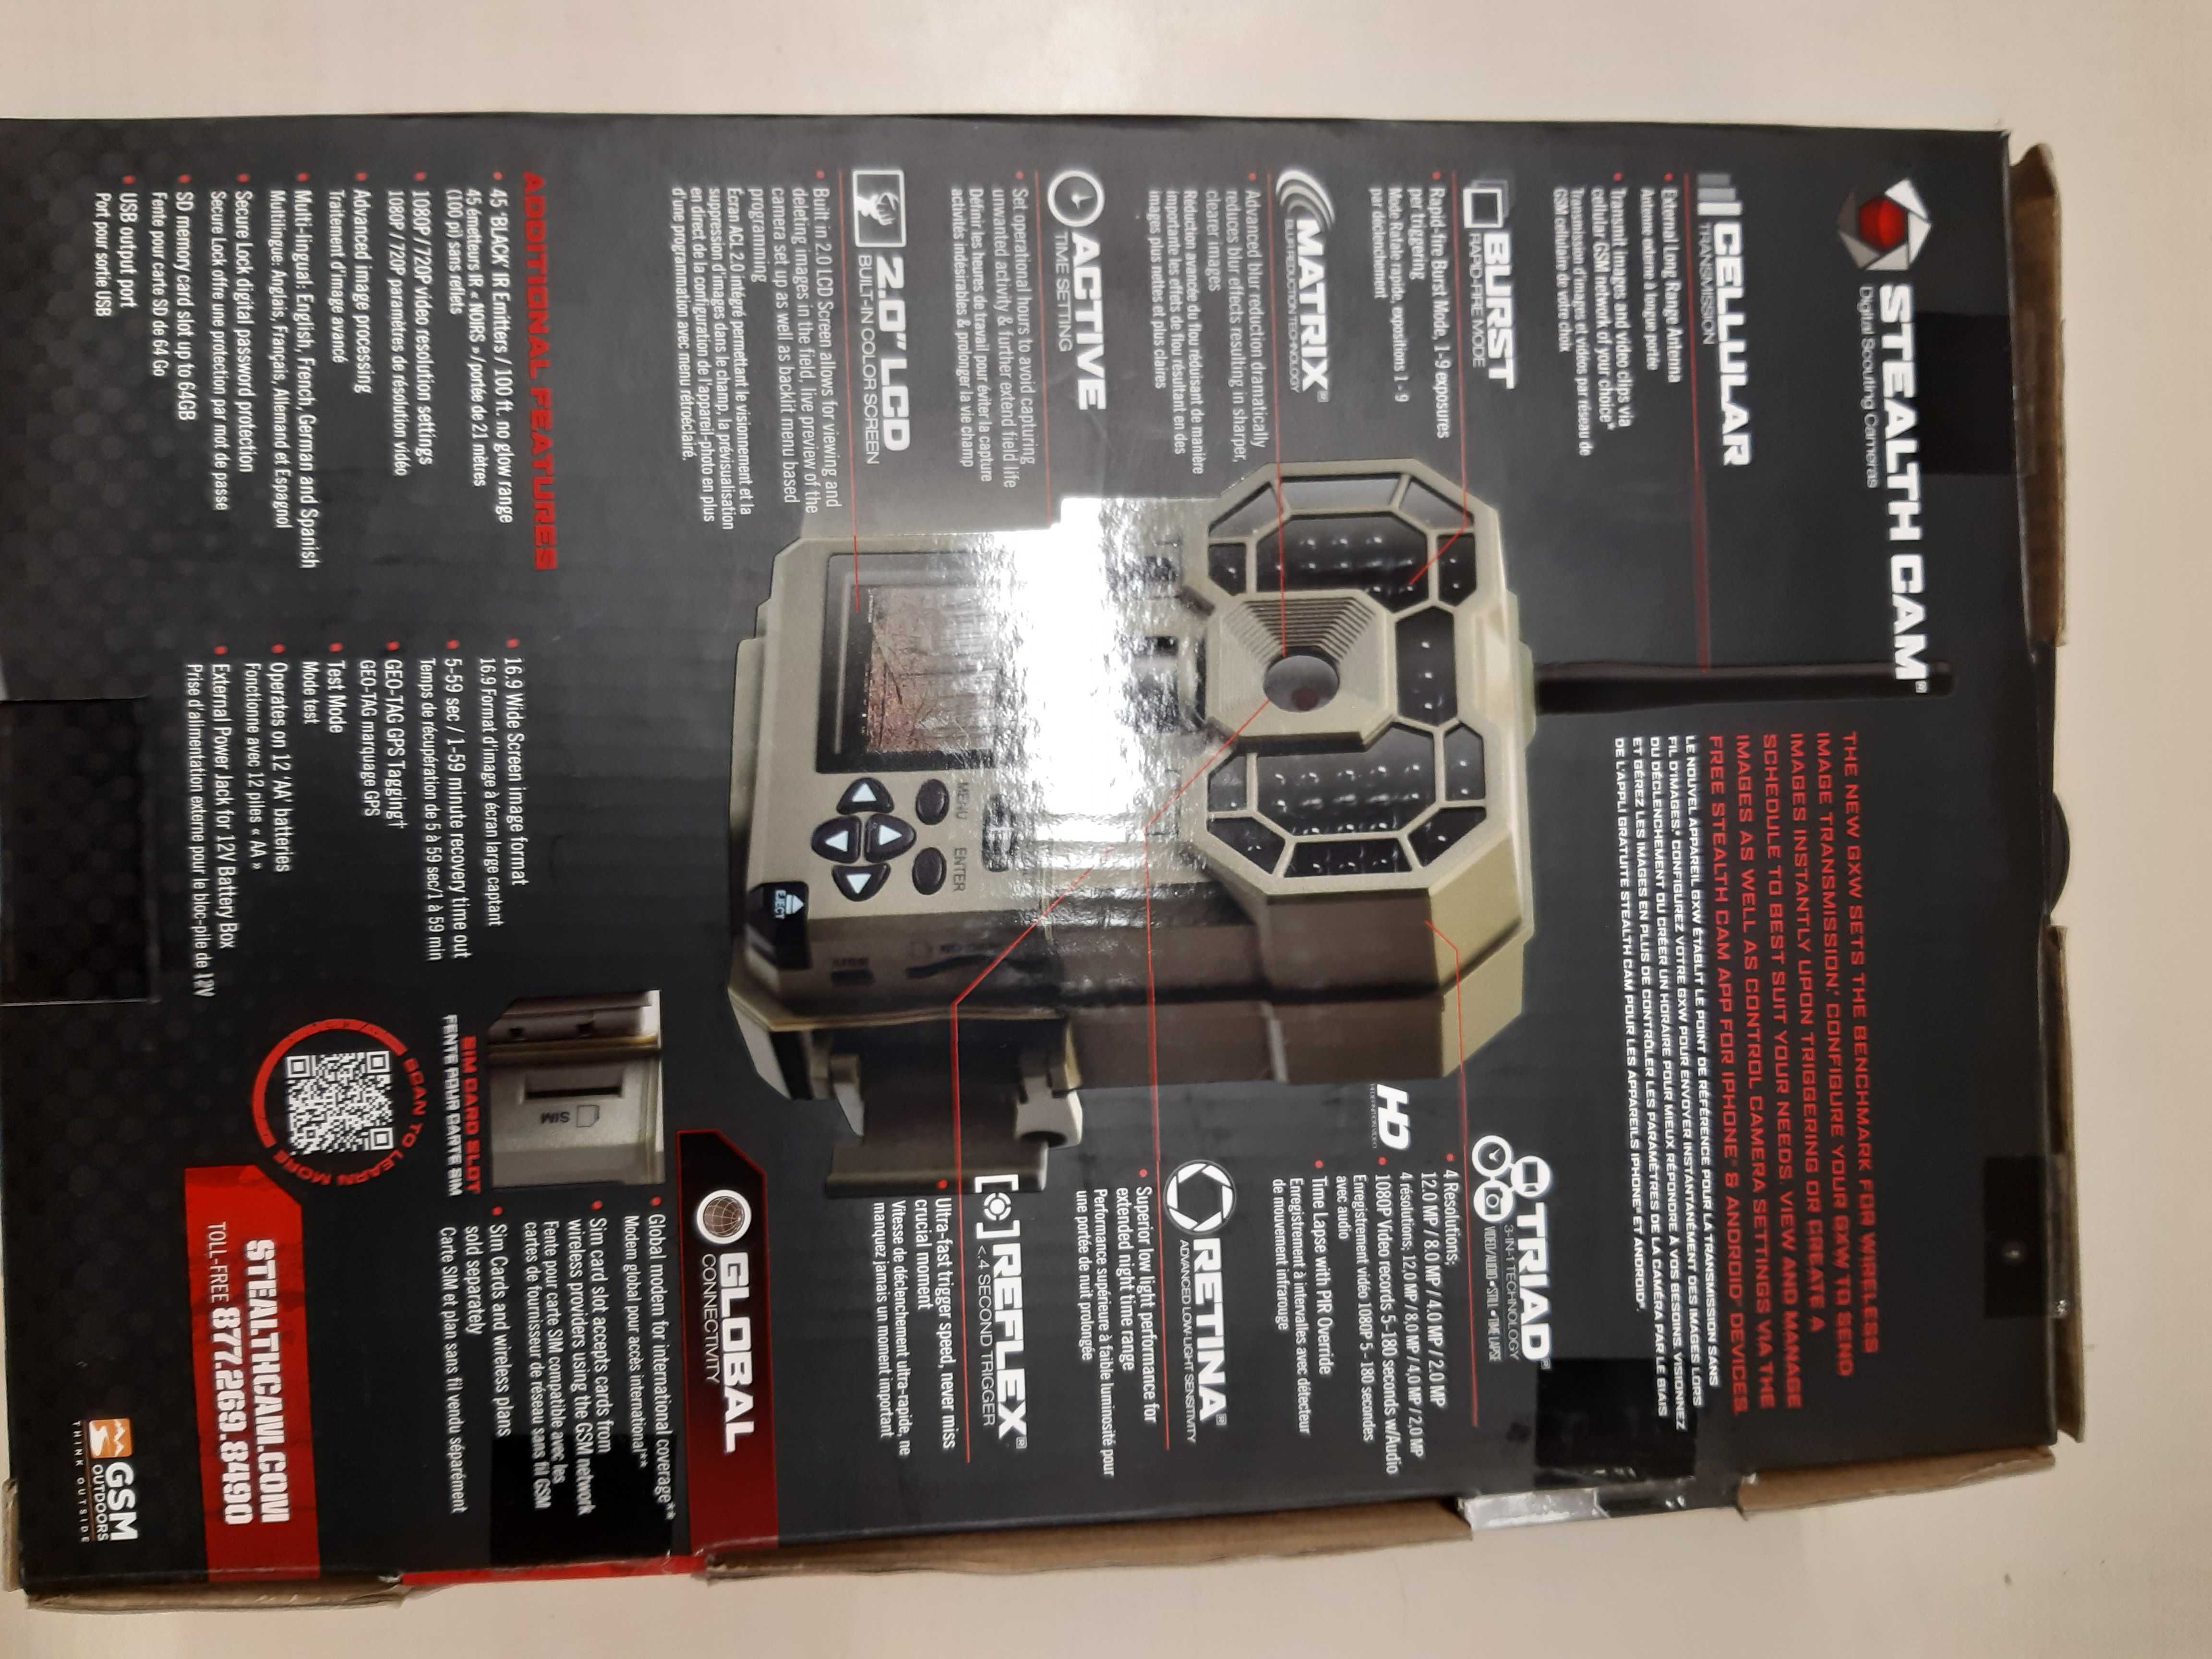 Vand camera vanatoare Stealtcam GX45NGW  12MP Infrarosu invizibil.